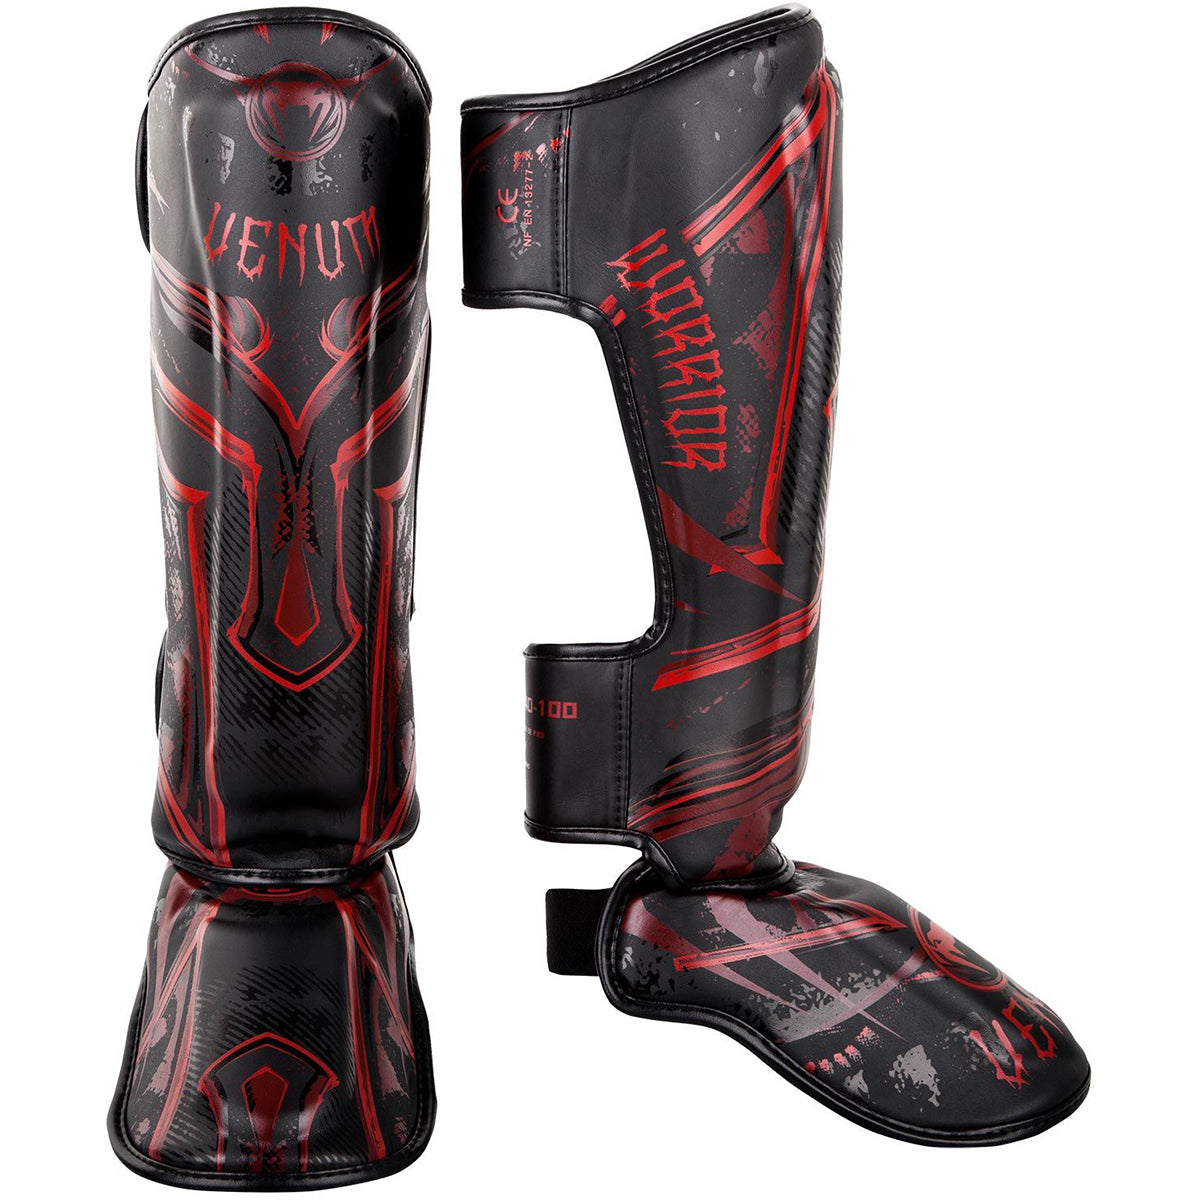 Venum Gladiator 3.0 Protective Shin Guards - Black/Red Venum